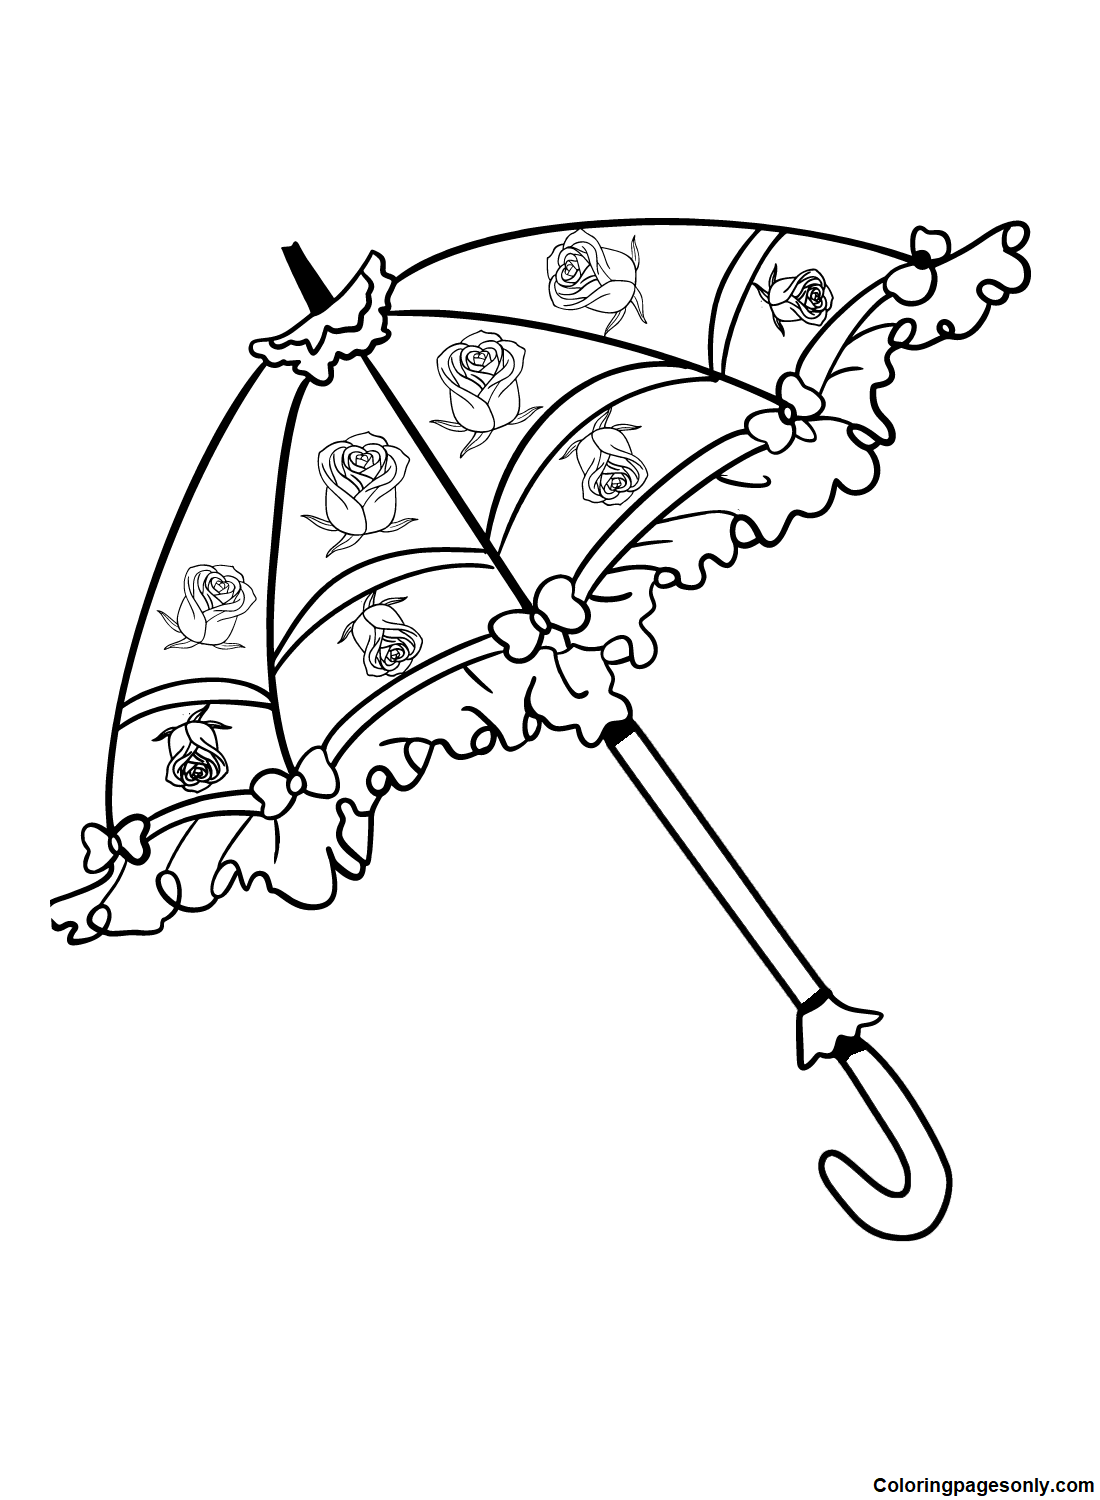 Precioso paraguas de Umbrella